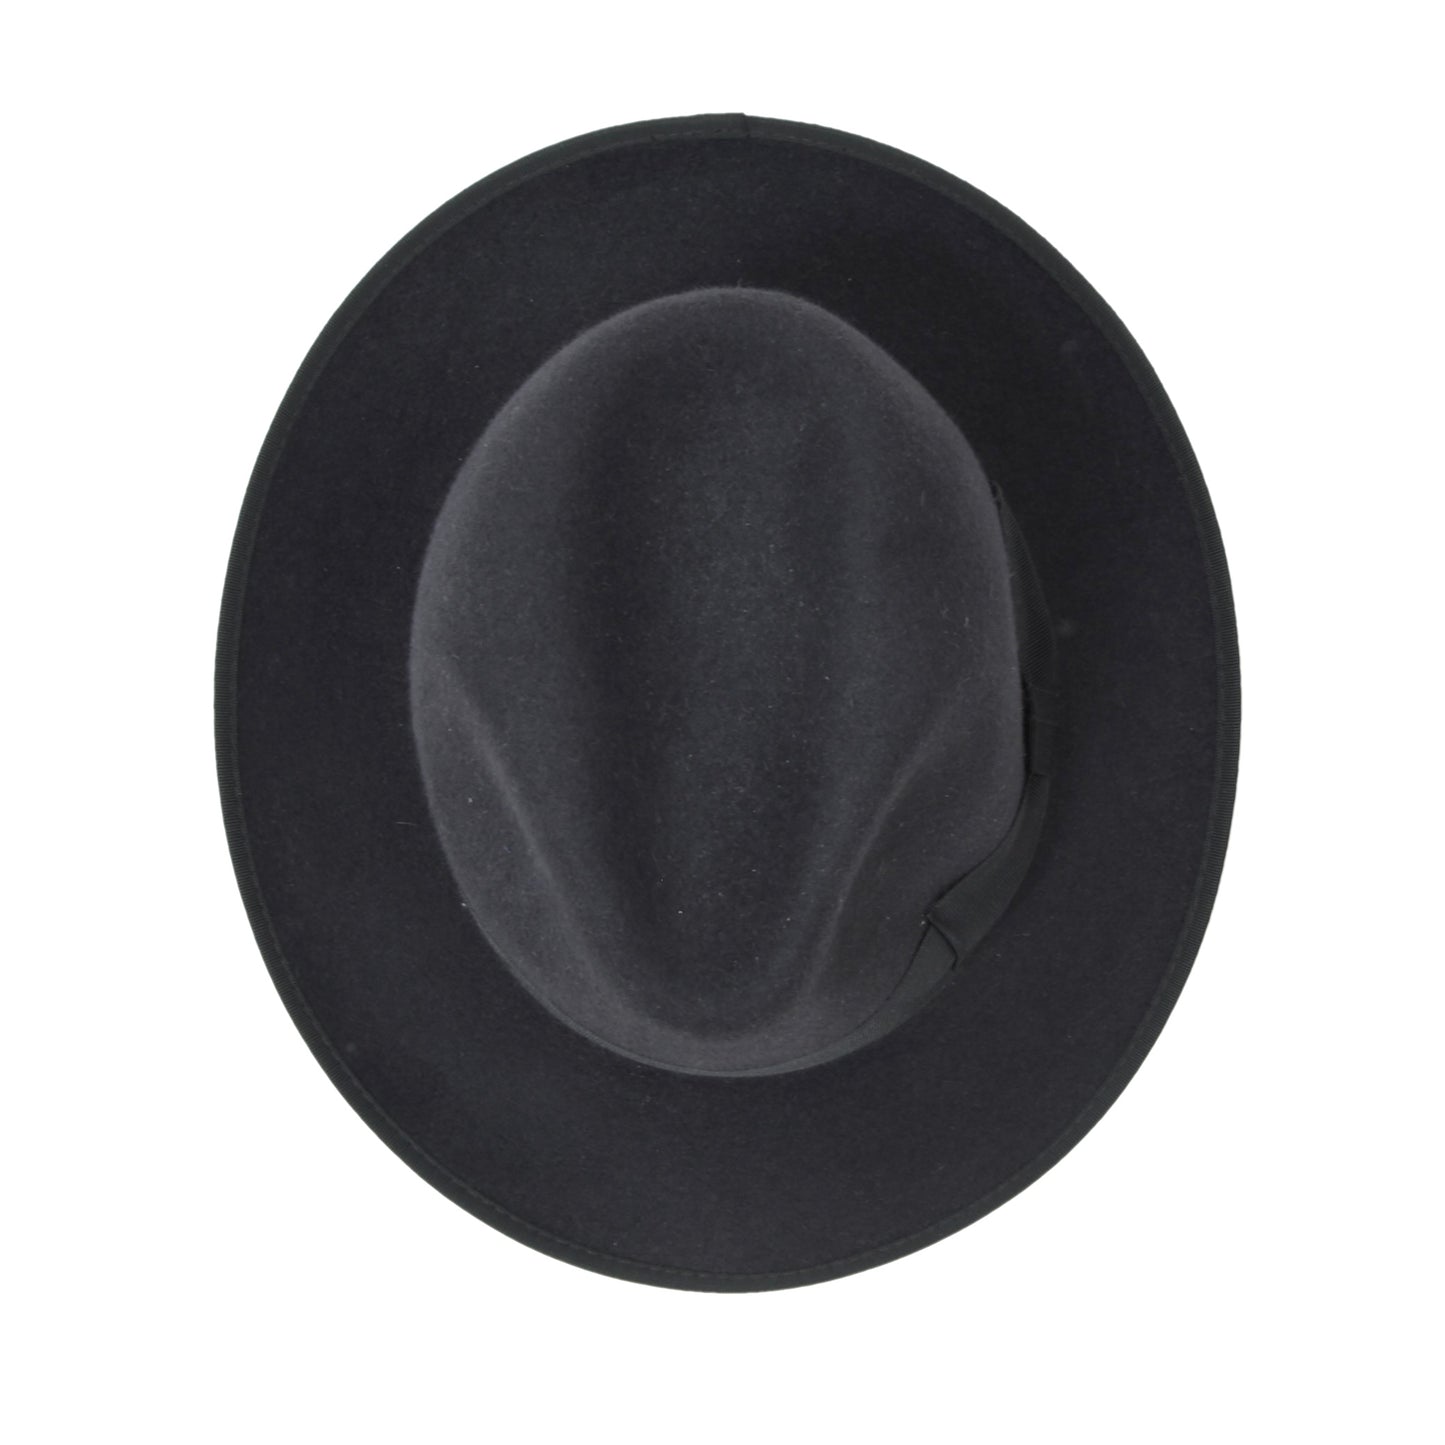 Albertini Vintage Fedora Hat Size 56 - Grey